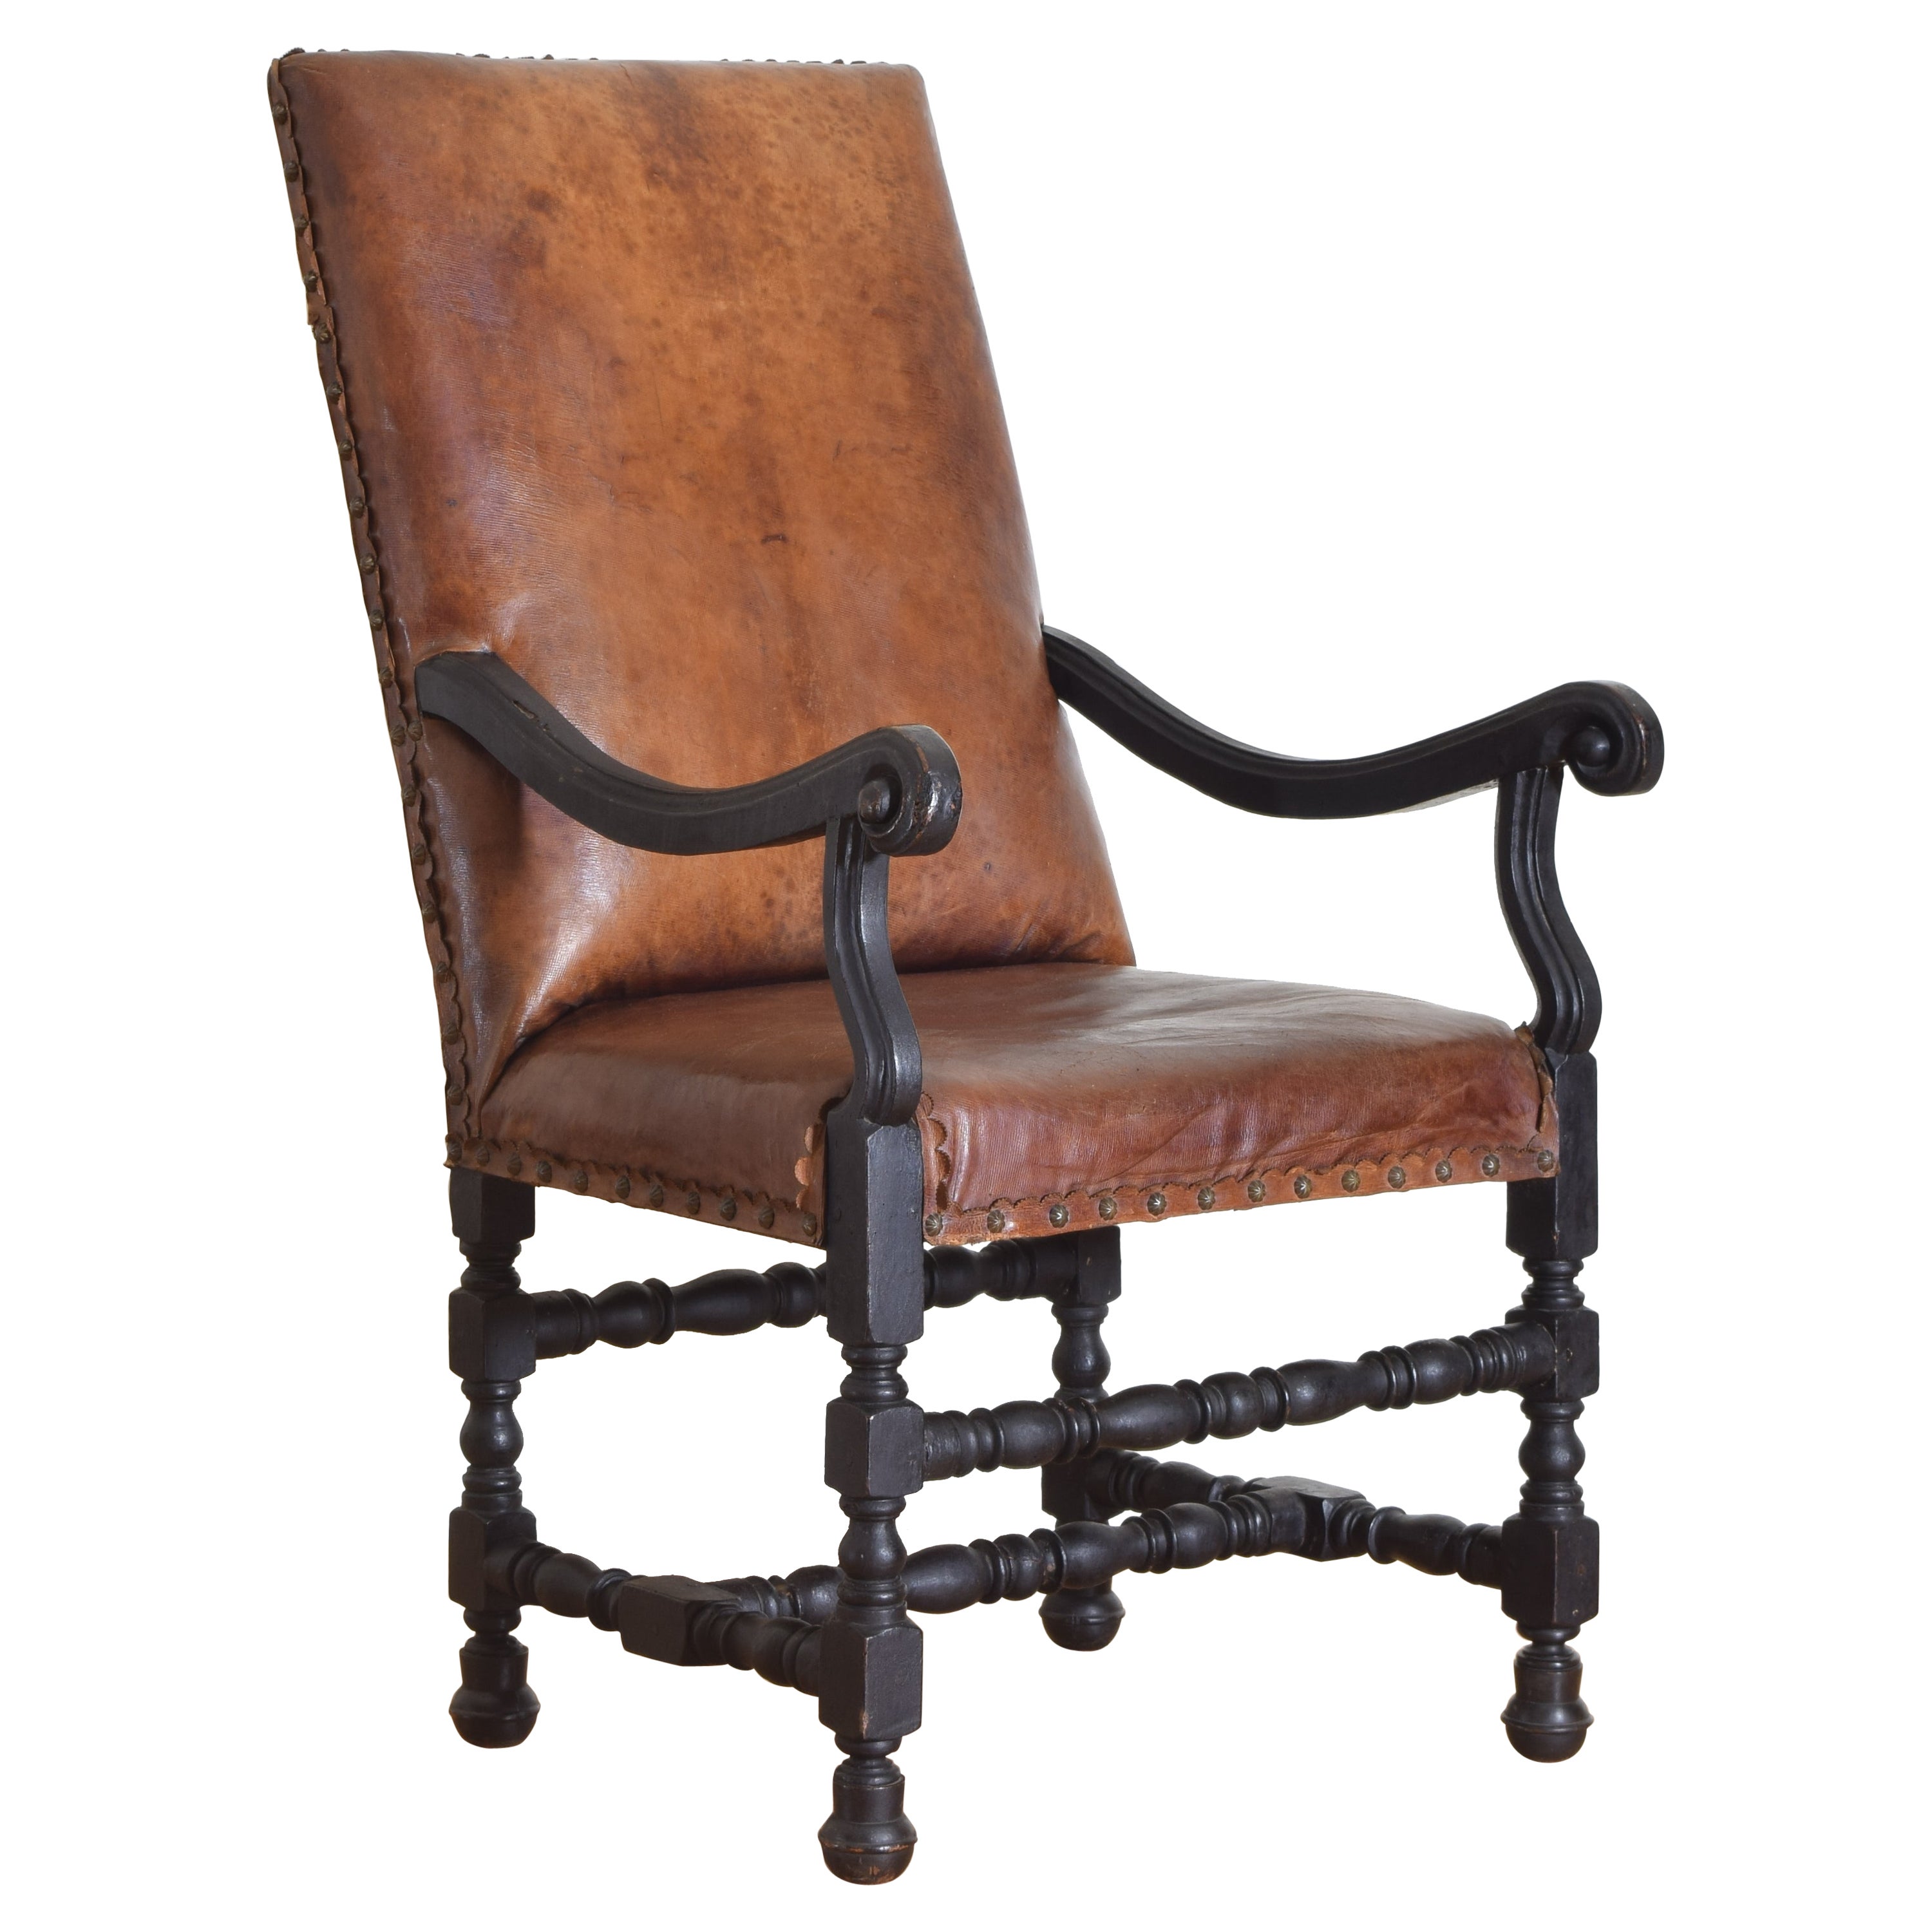 Italian Louis XIV Period Ebonized Walnut & Leather Upholstered Armchair, 18thc